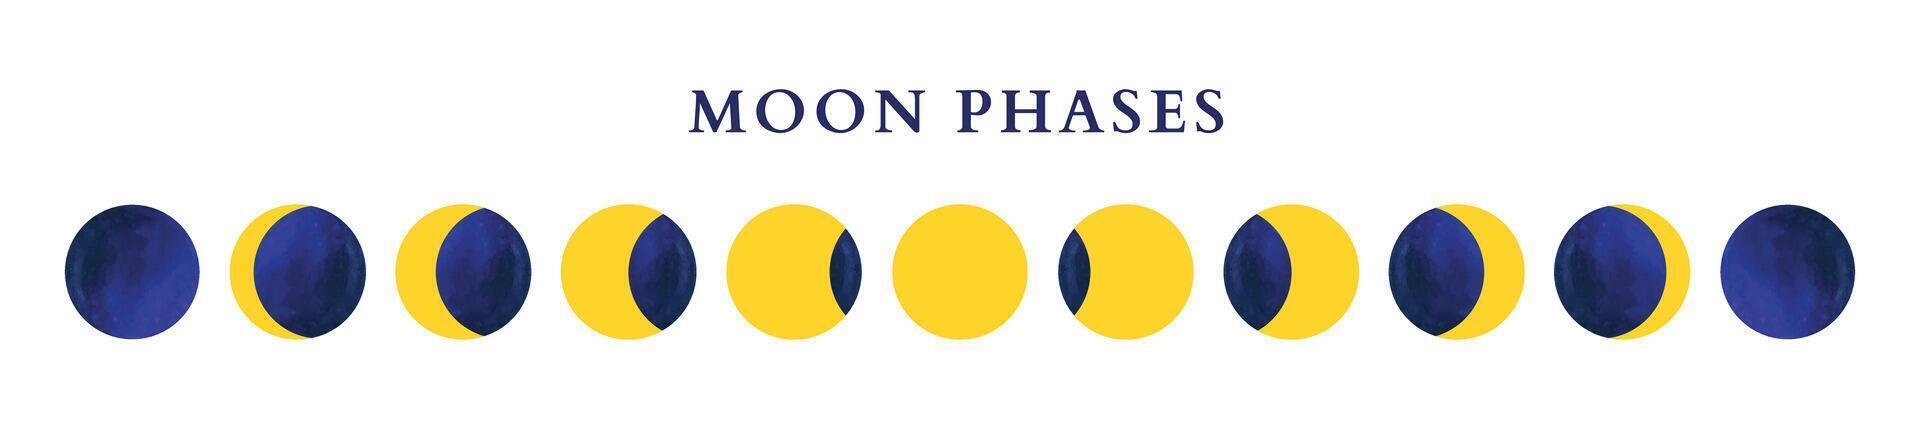 Night Sky Moon Phases Illustration vector